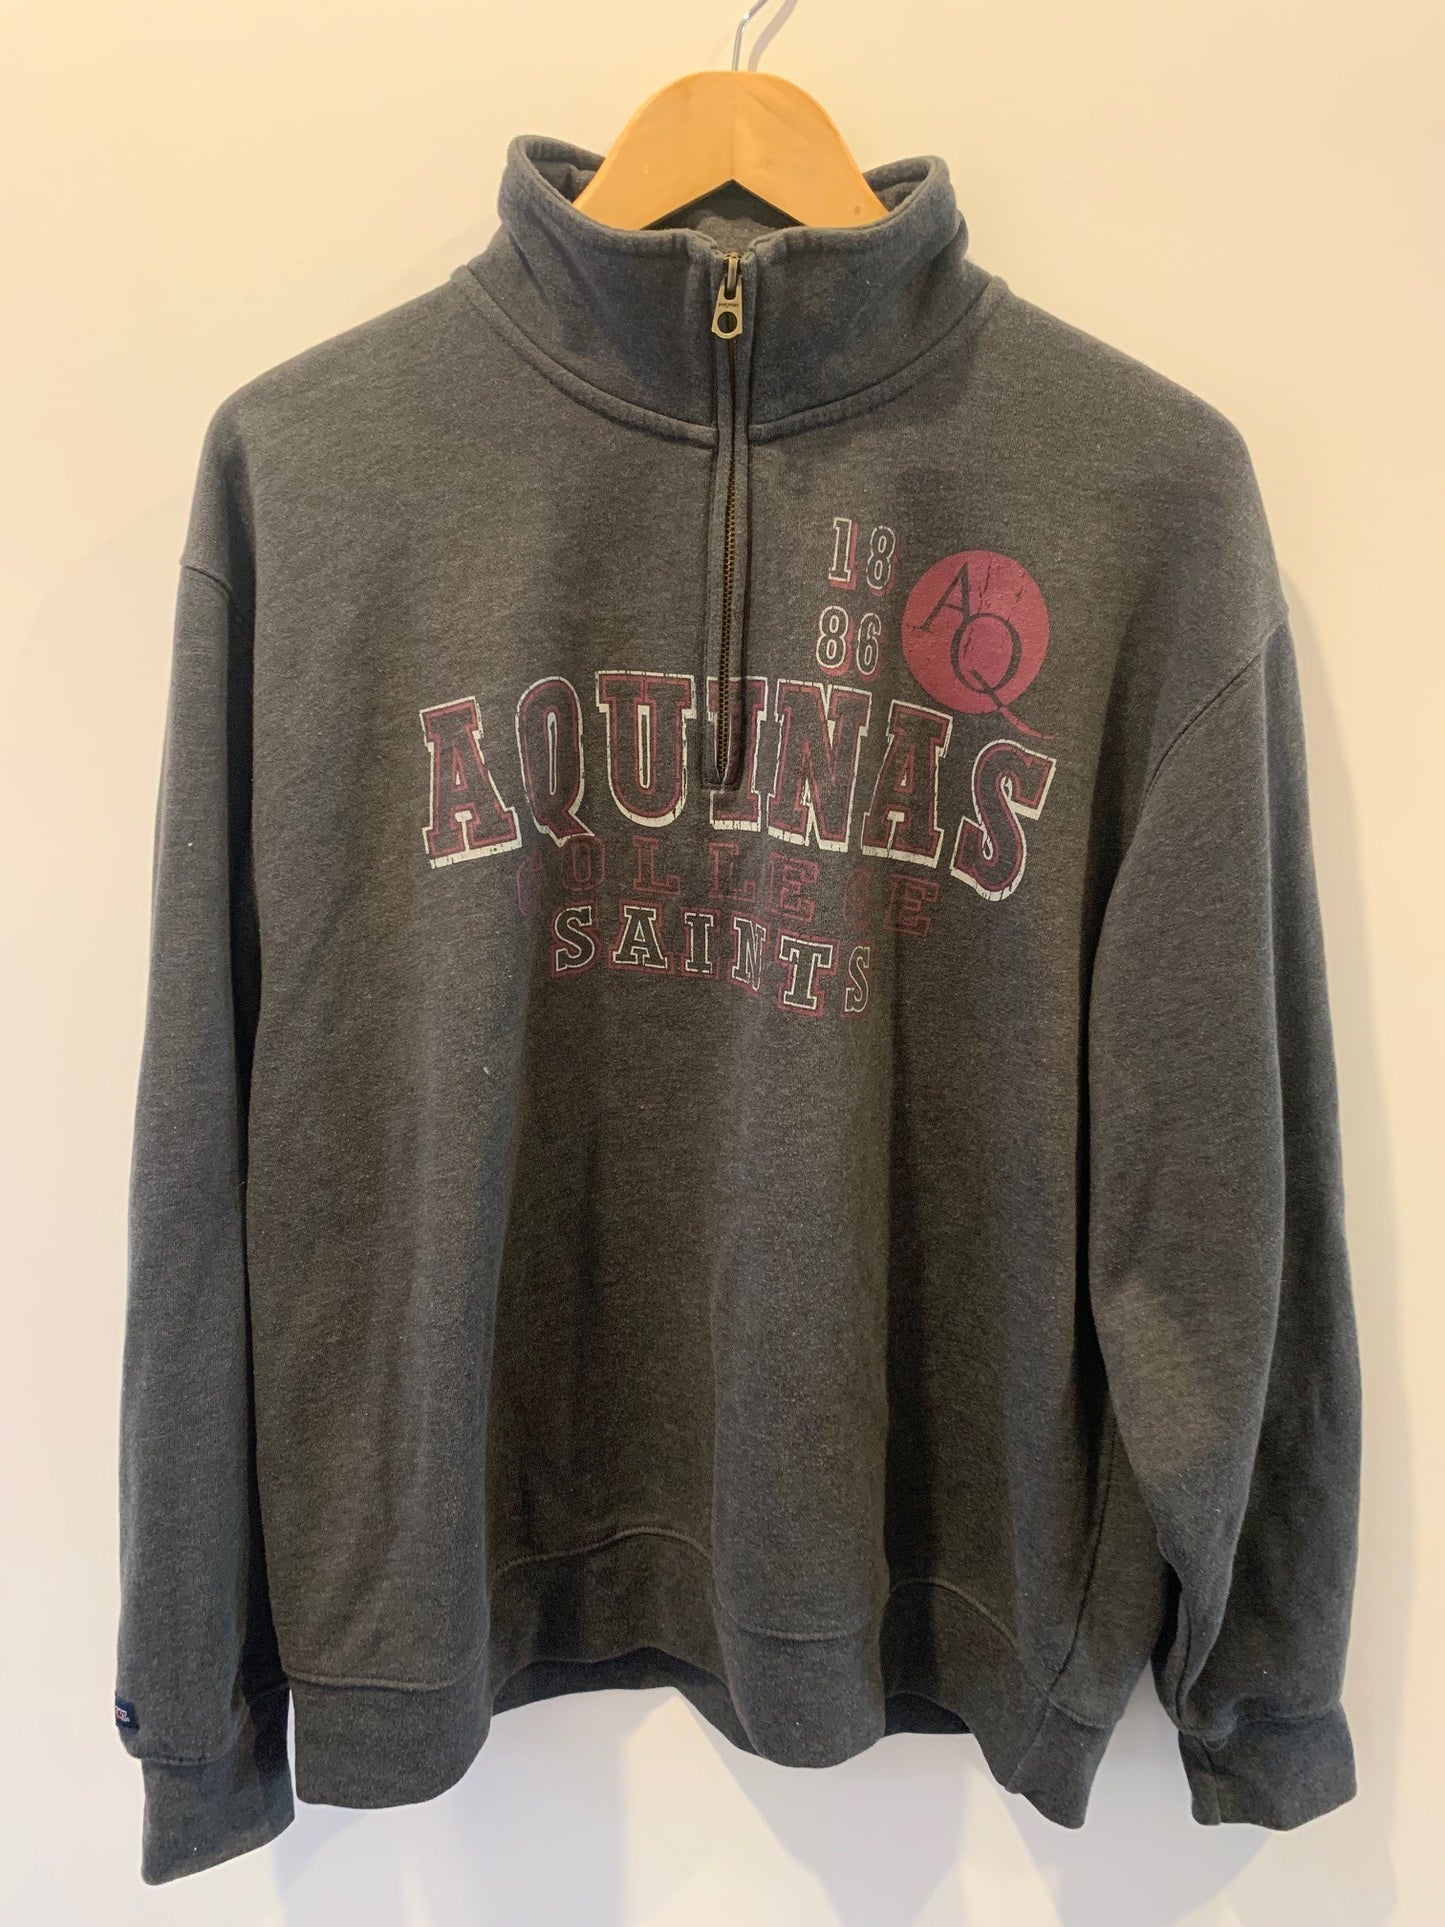 NCAA Aquinas College Saints Sweater